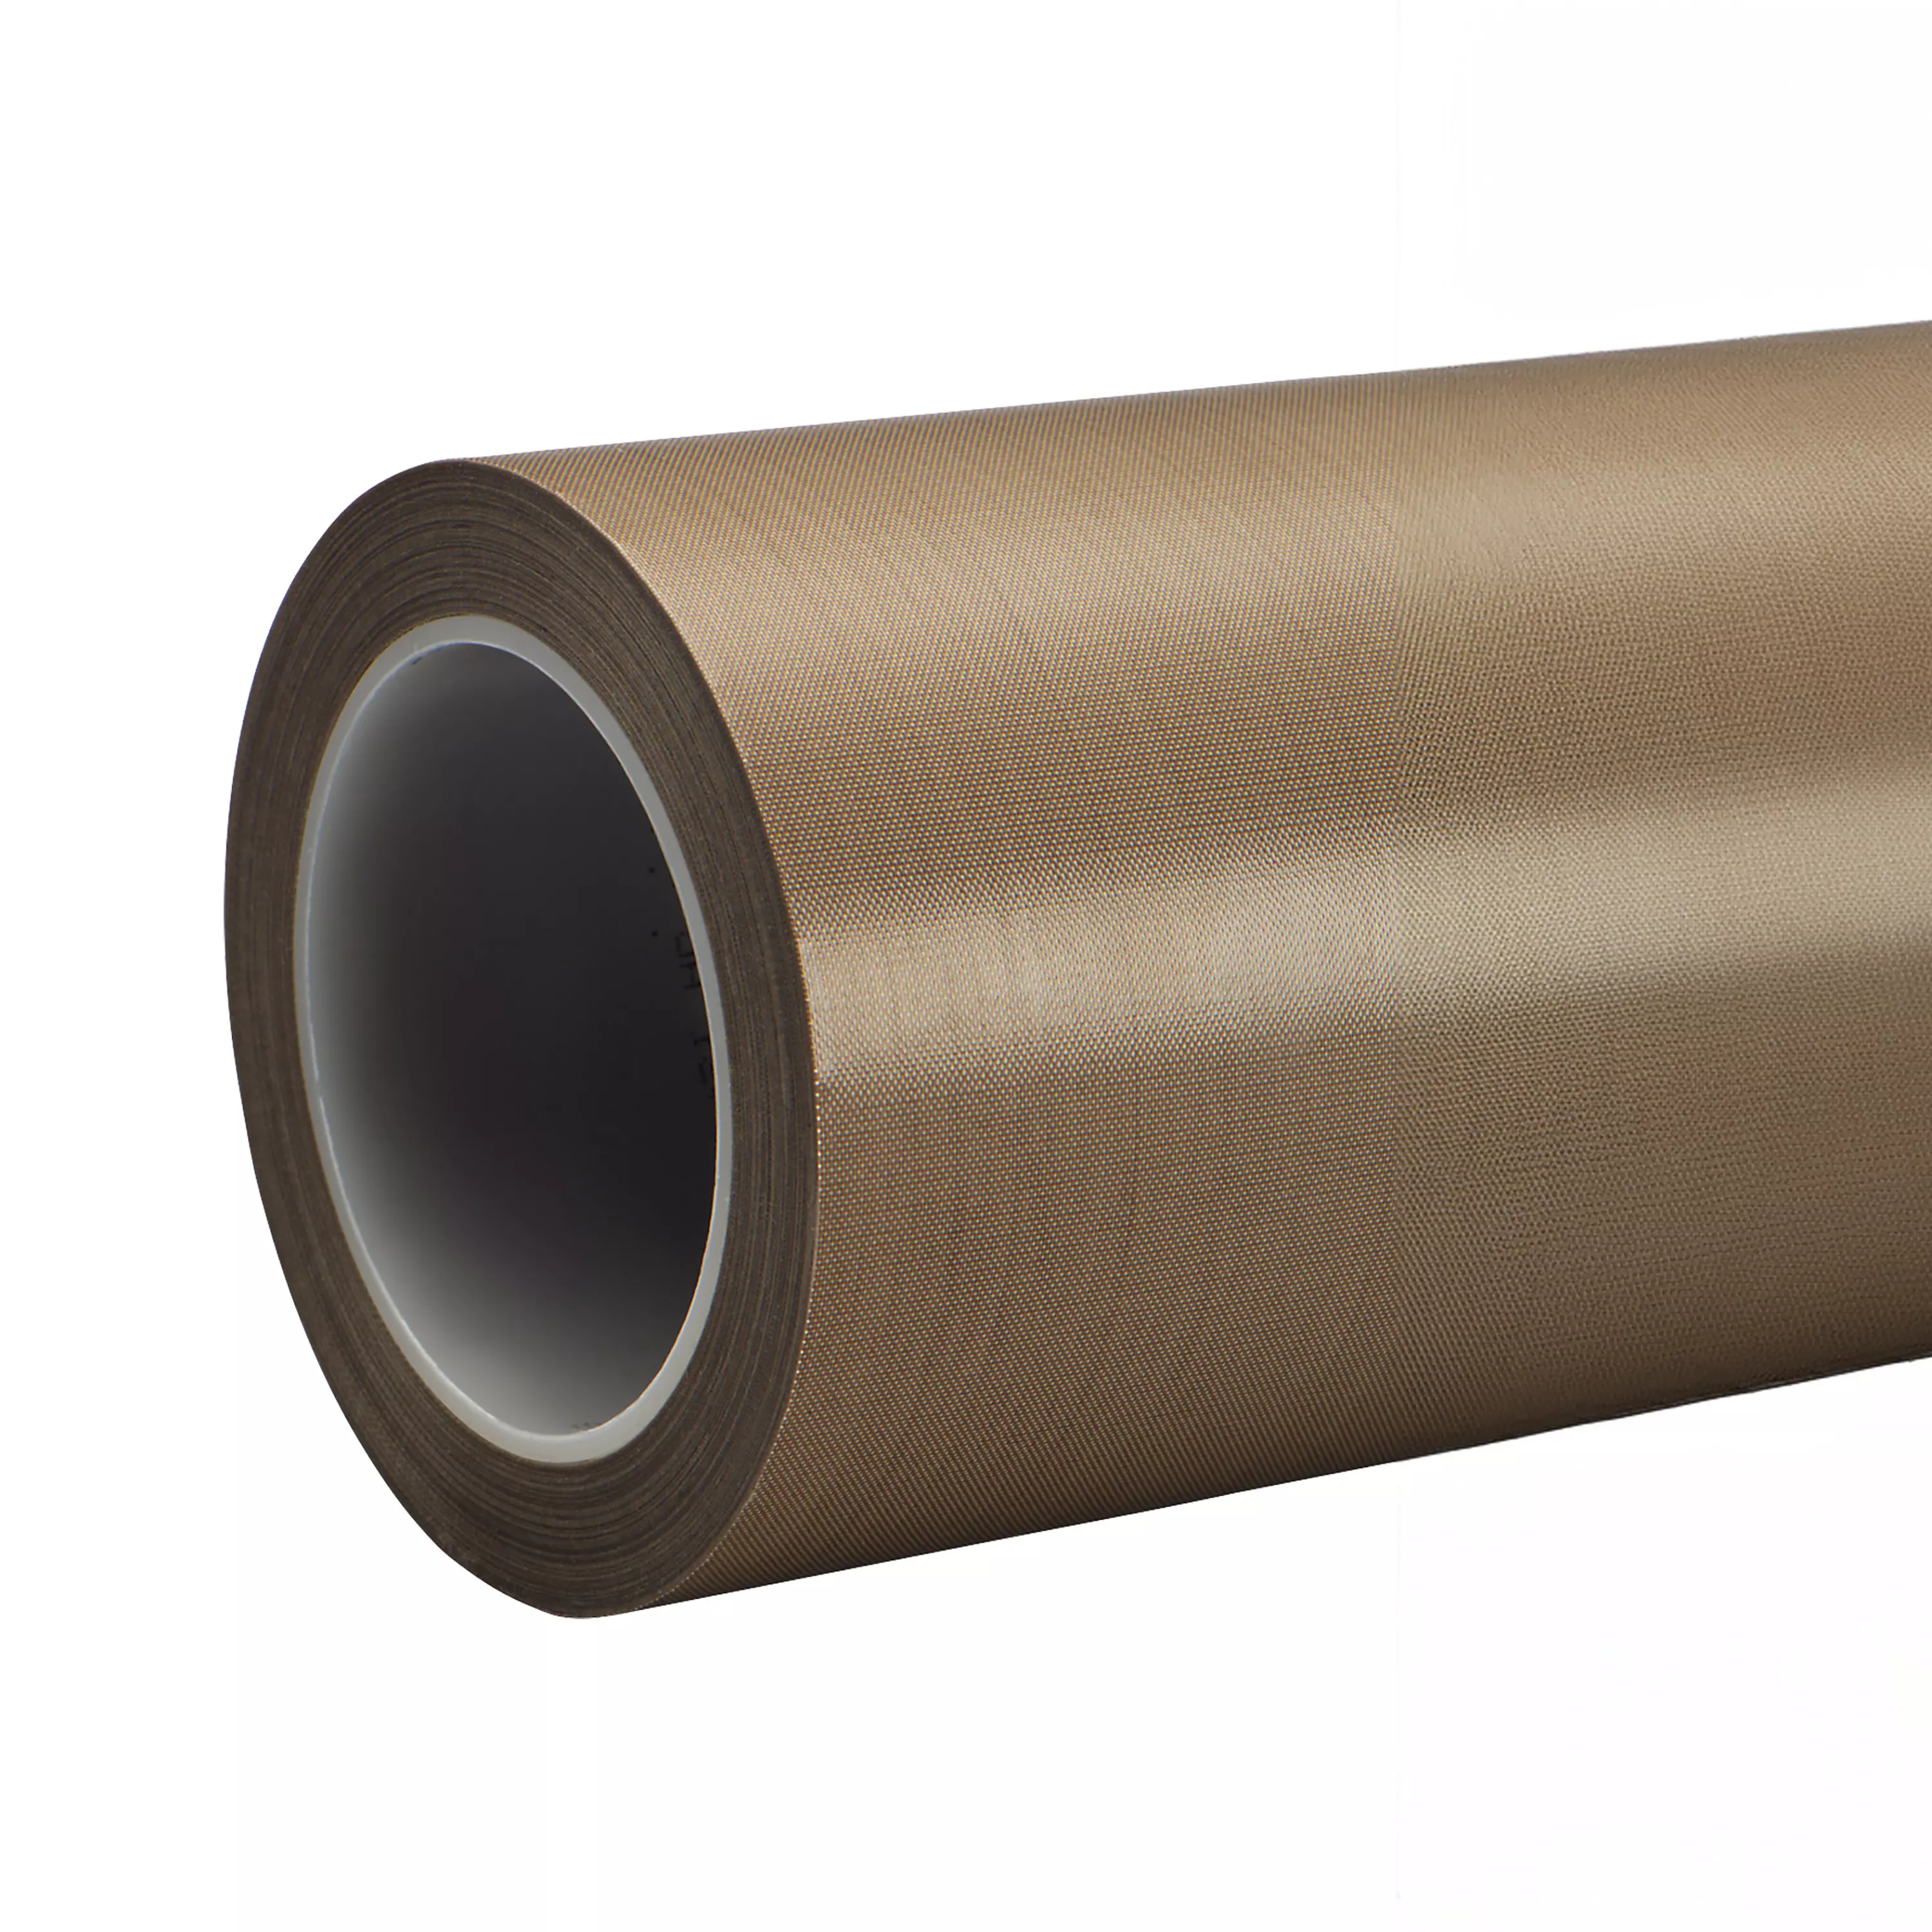 3M™ PTFE Glass Cloth Tape 5451, Brown, 48 in x 36 yd, 5.6 mil, 1 roll
per case